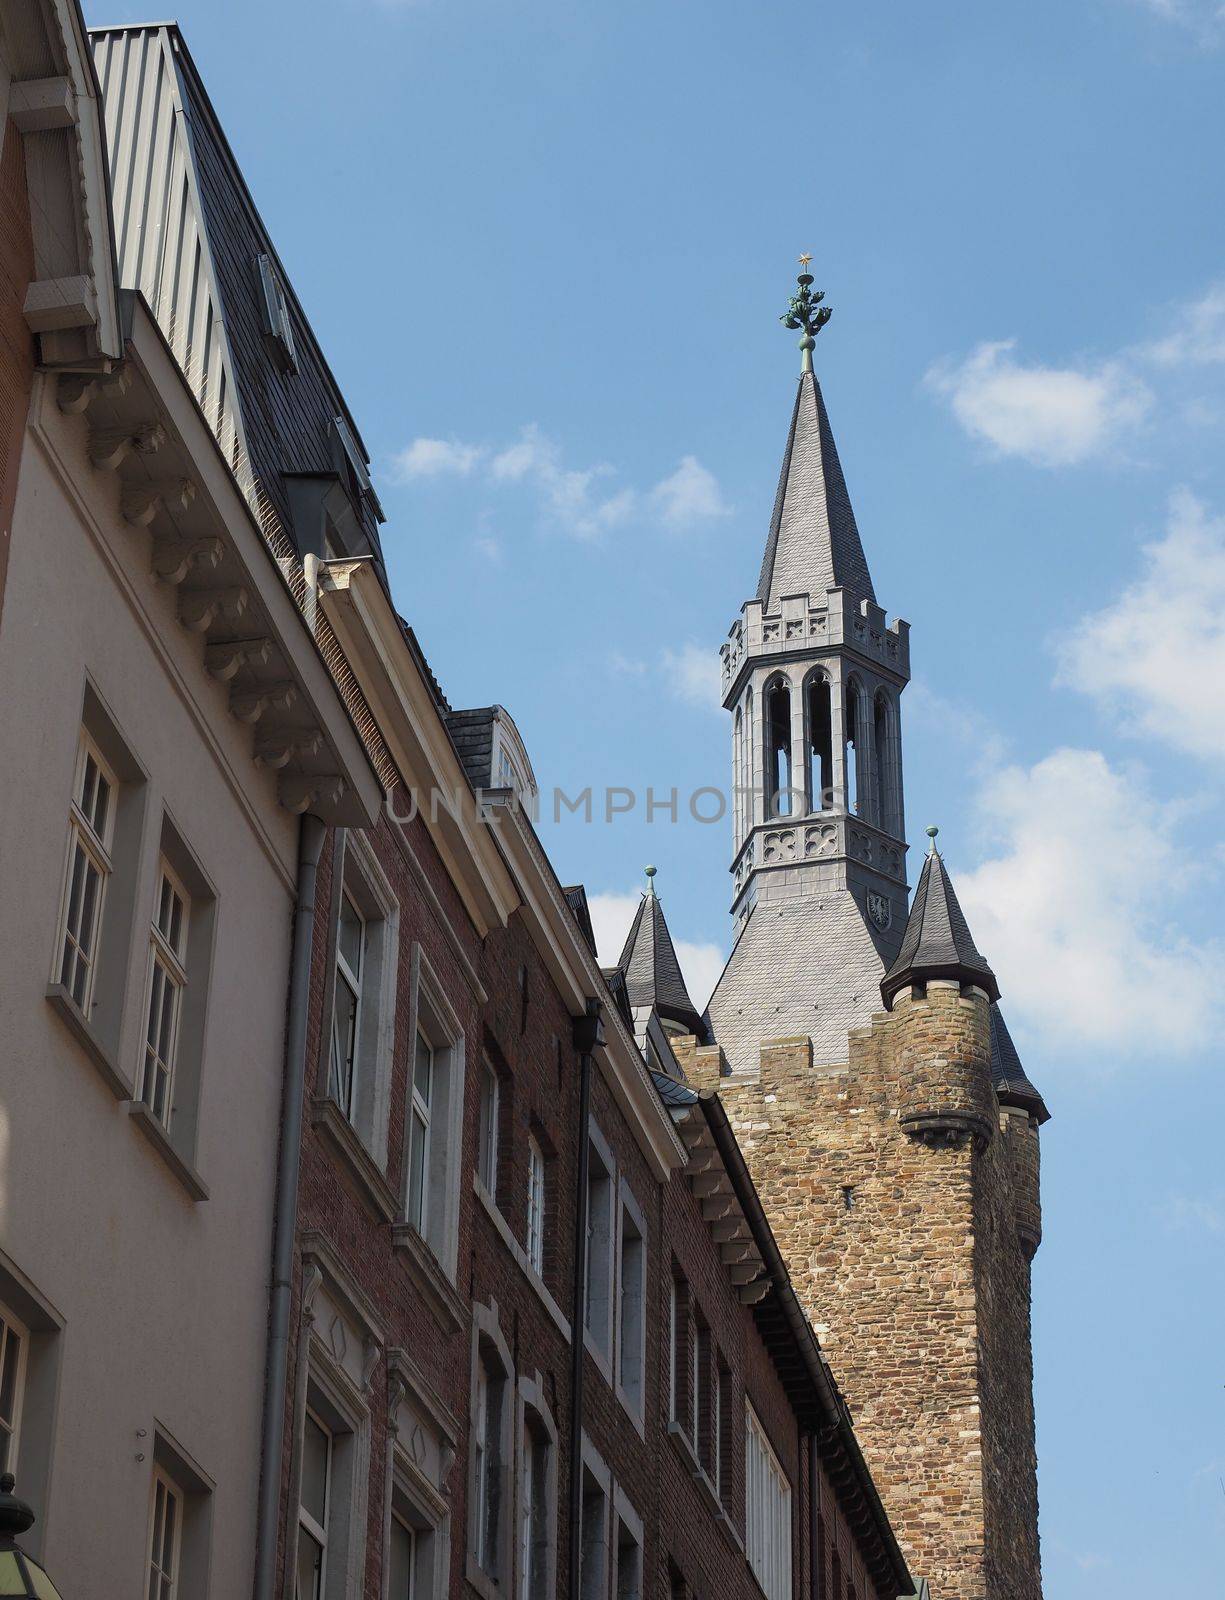 Turm der Alte Pfalzanlage (Tower of Old Palatinate) in Aachen by claudiodivizia